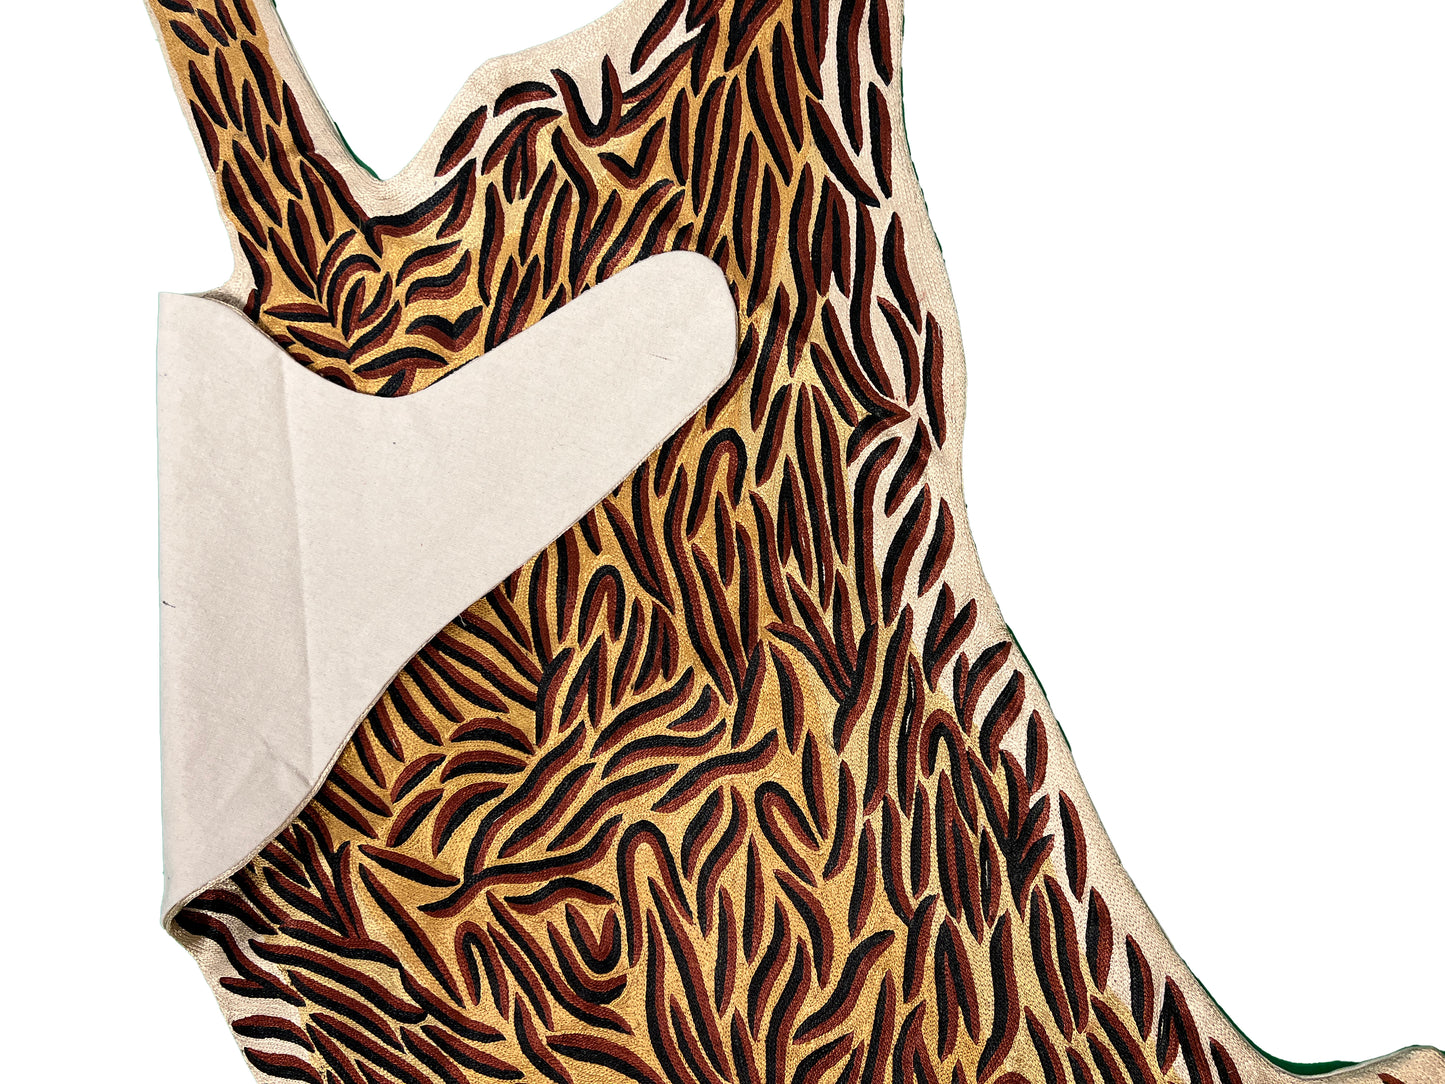 Handmade Silk Tiger Throw product image #28900947198122